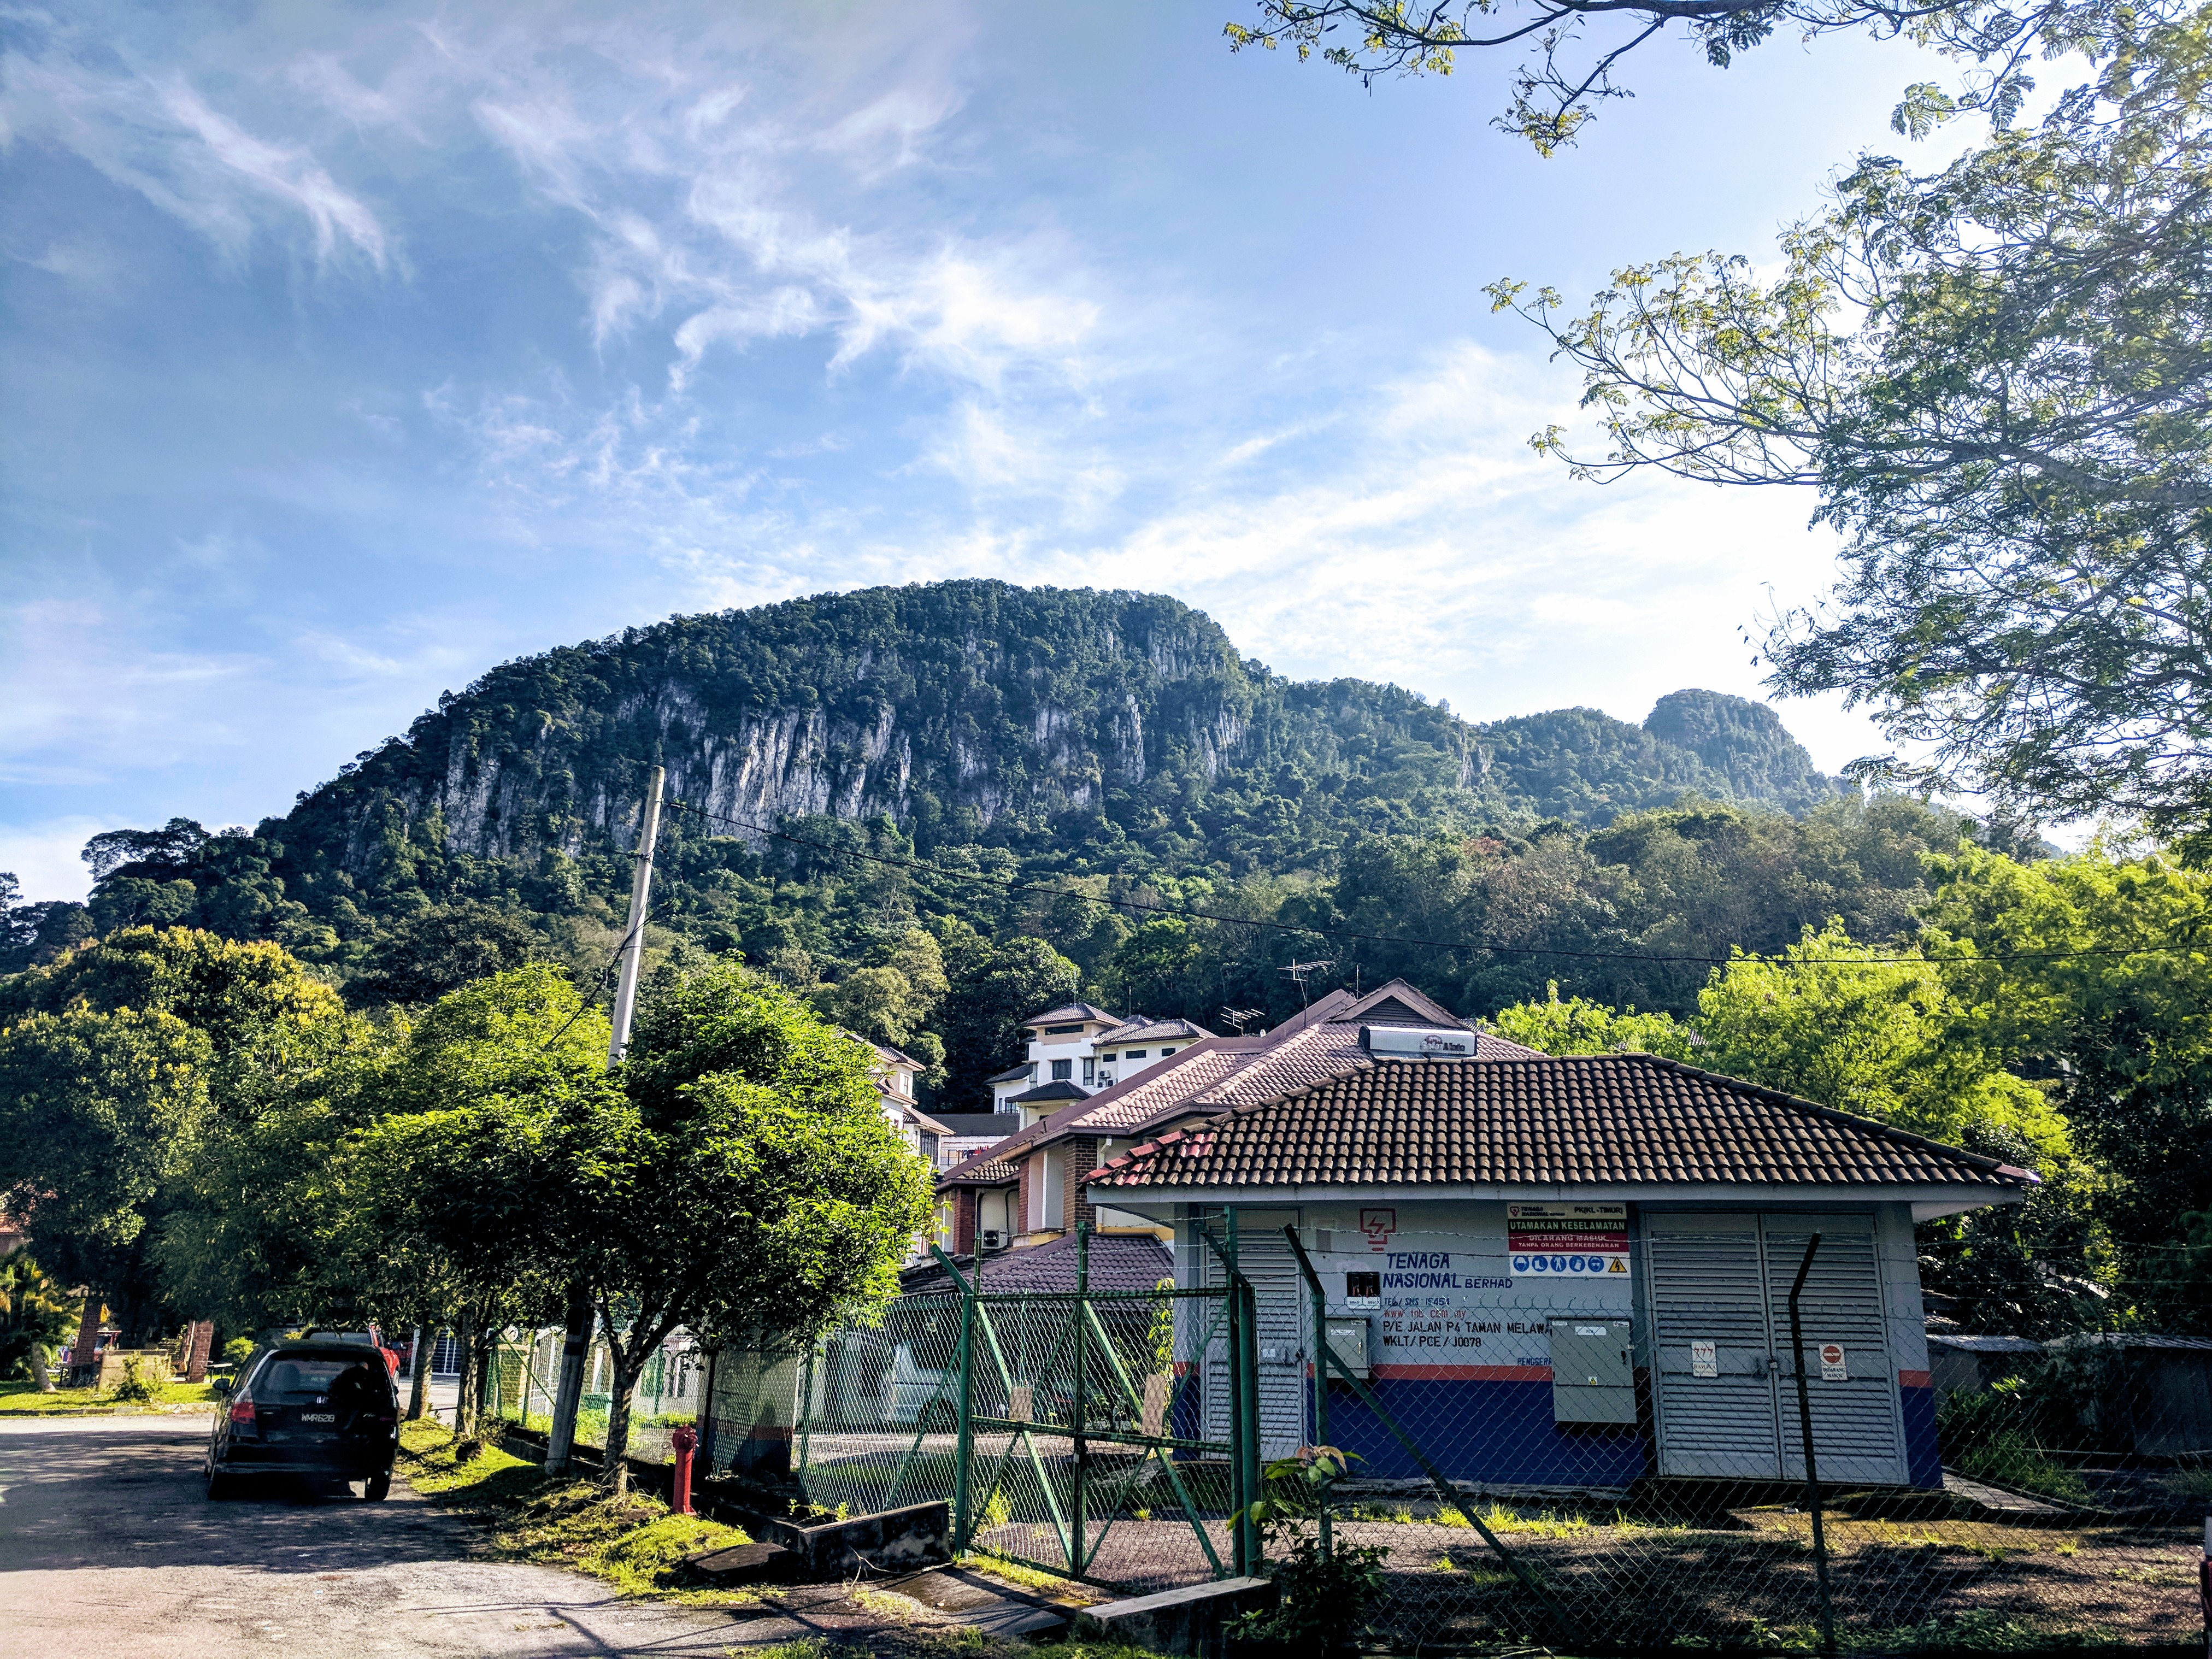 Day 3 – Malaysian Mountains